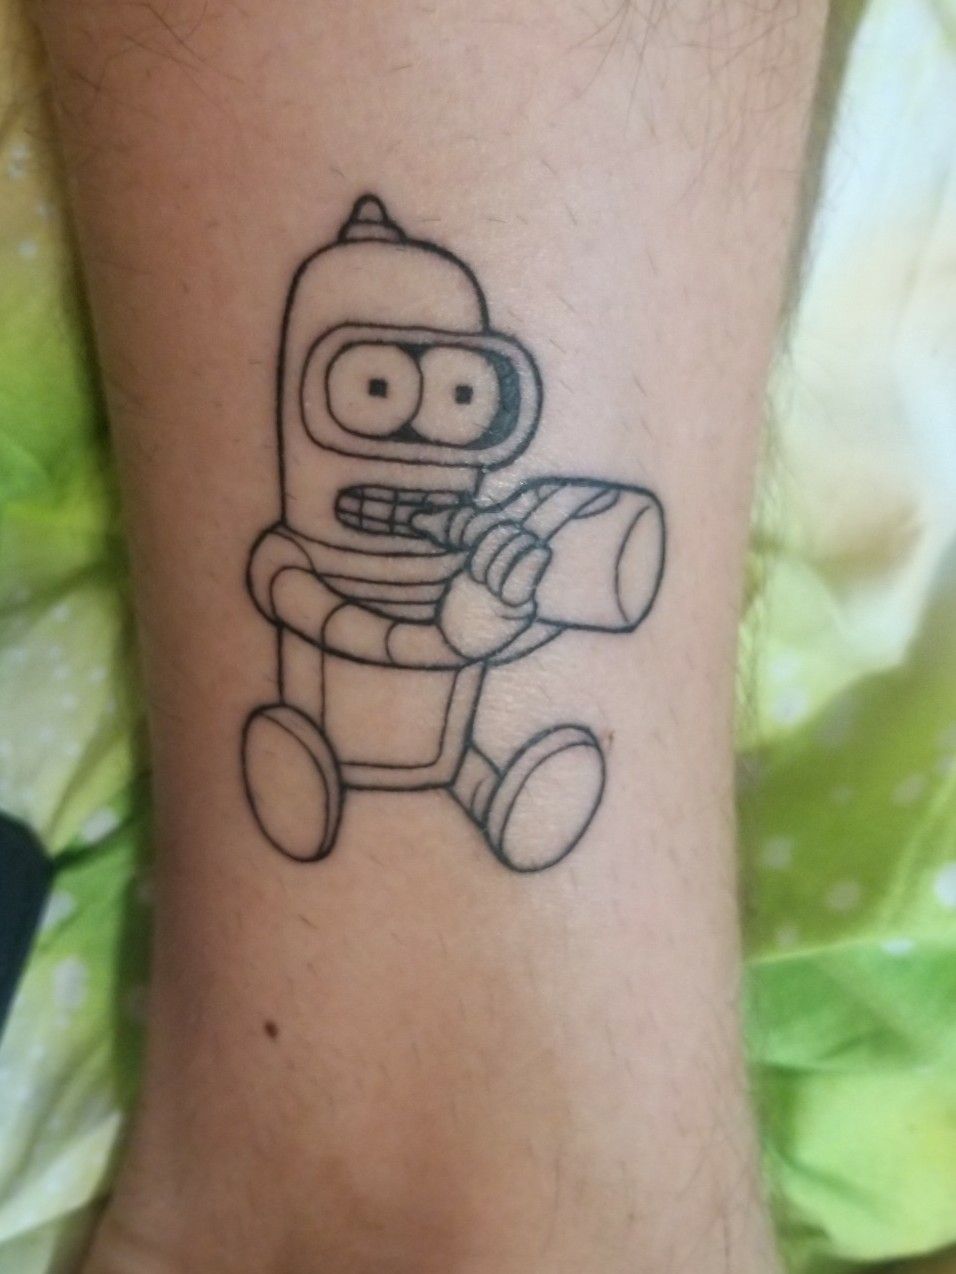 Bender tattoo futurama by Alexmanga88 on DeviantArt